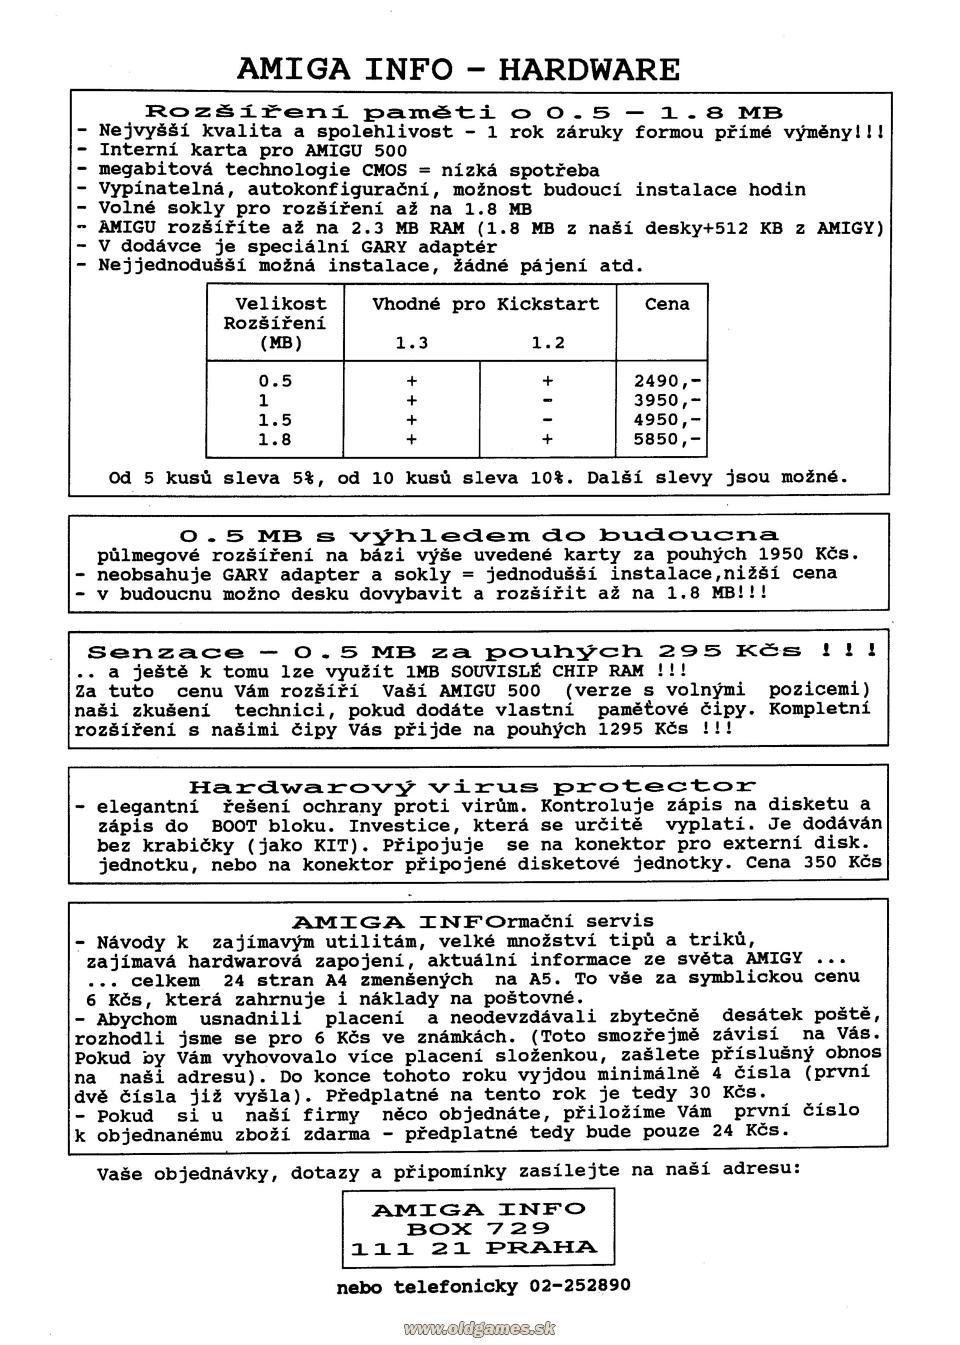 Amiga Info - Hardware